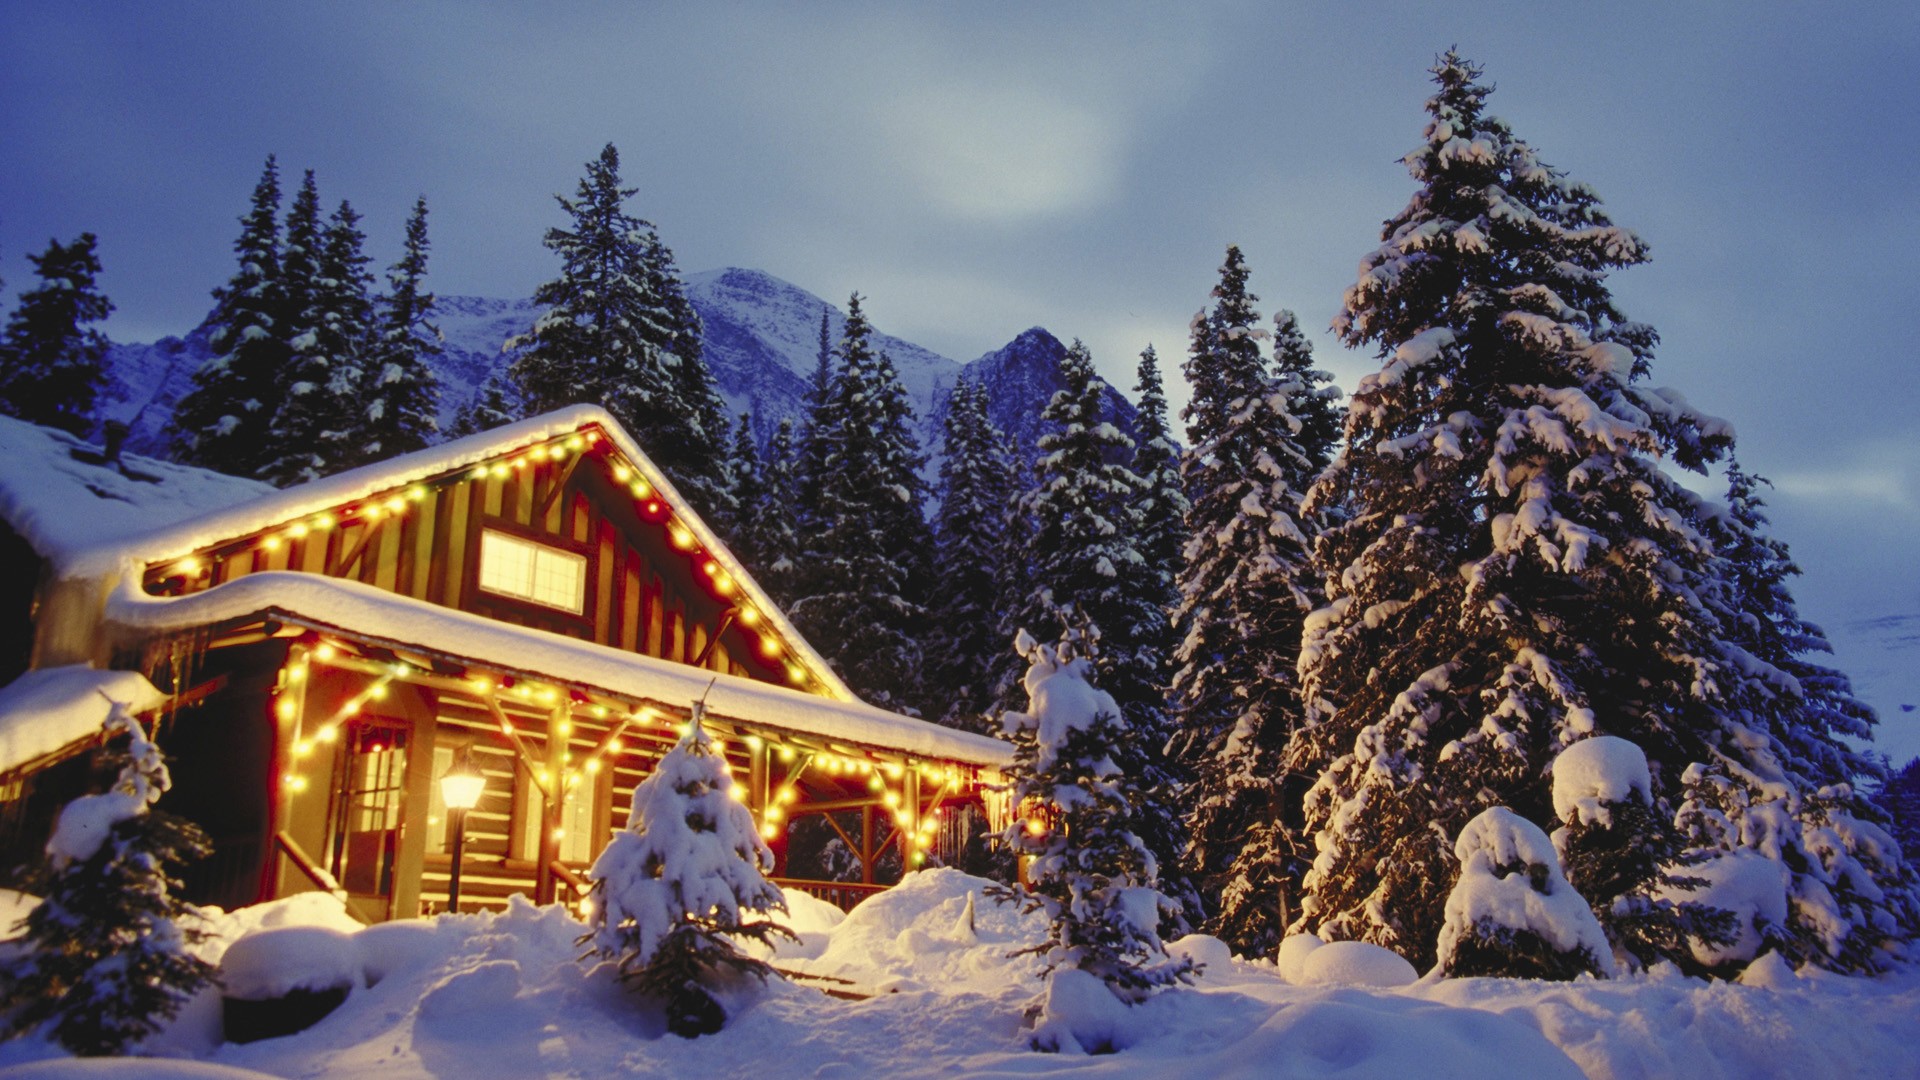 christmas-scene-in-snowy-mountains-wallpaper.jpg